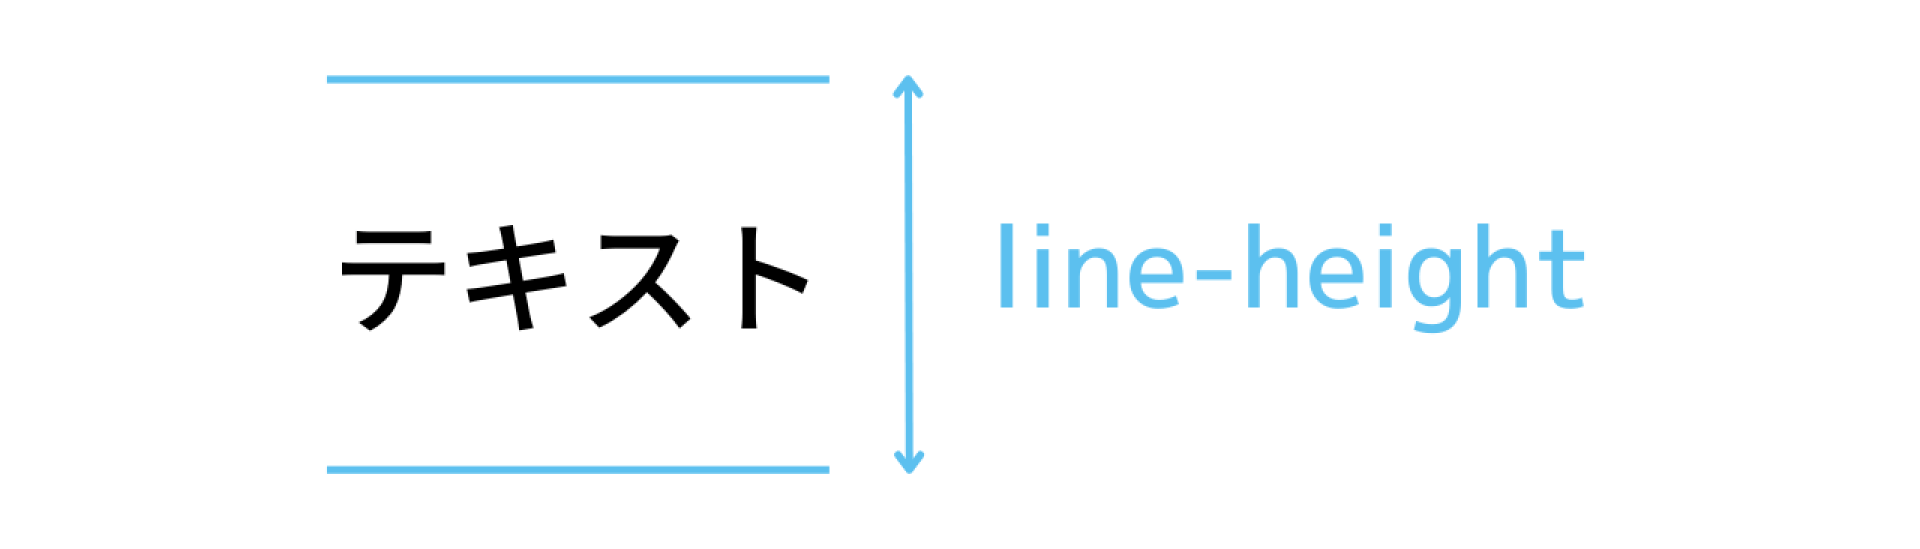 line-heightの範囲